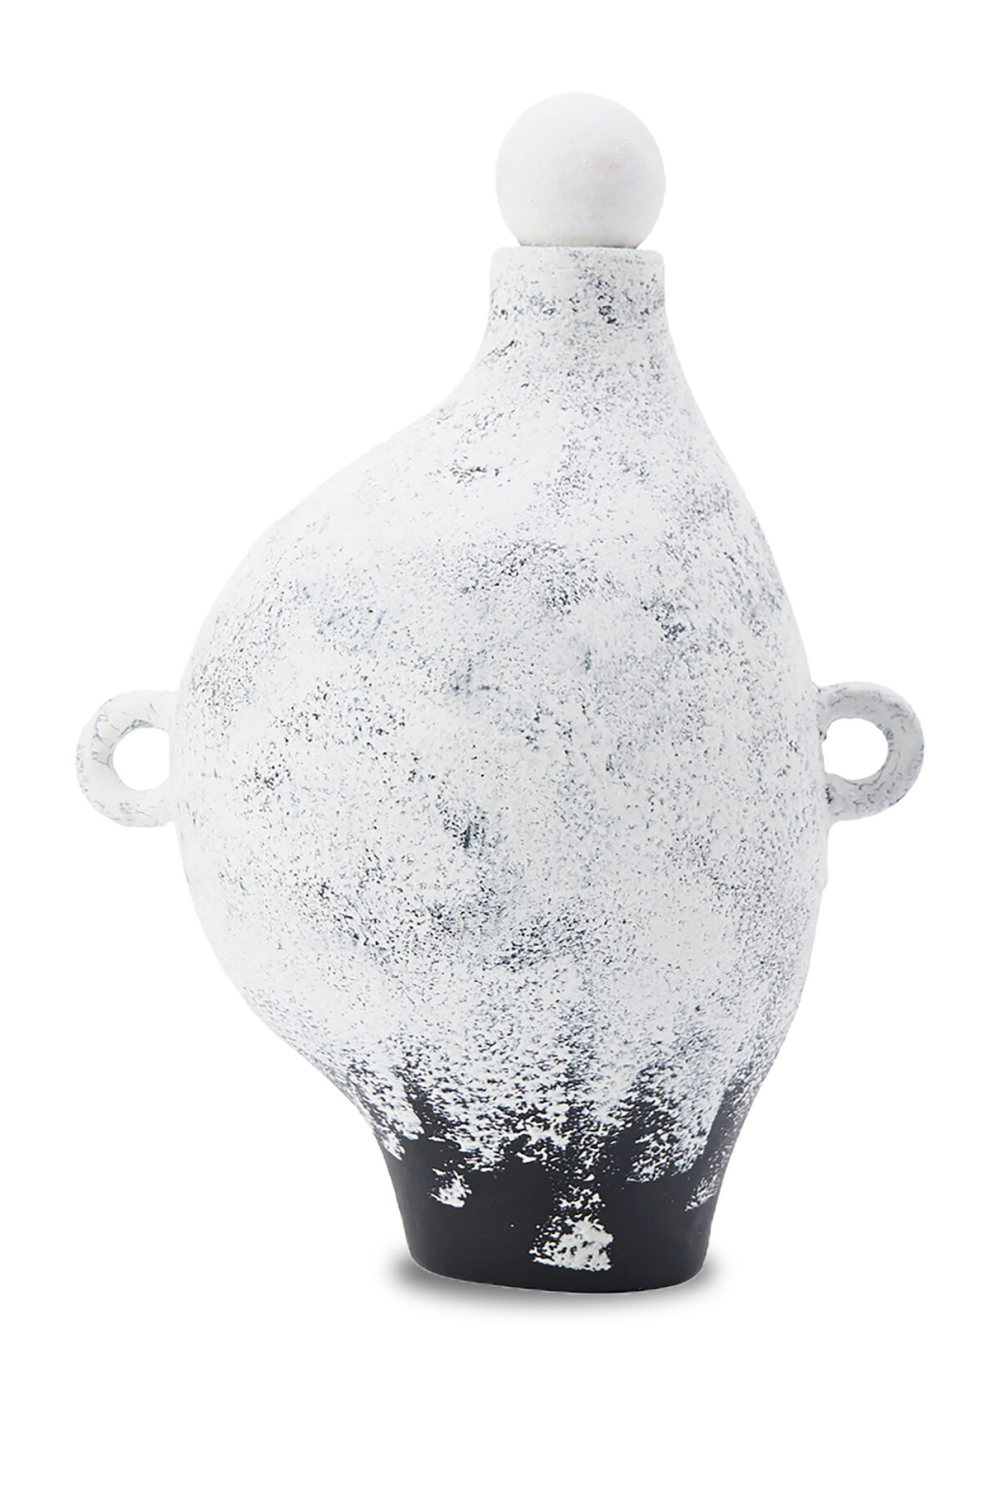 Black & White Ceramic Vase | Liang & Eimil Penza | Oroa.com